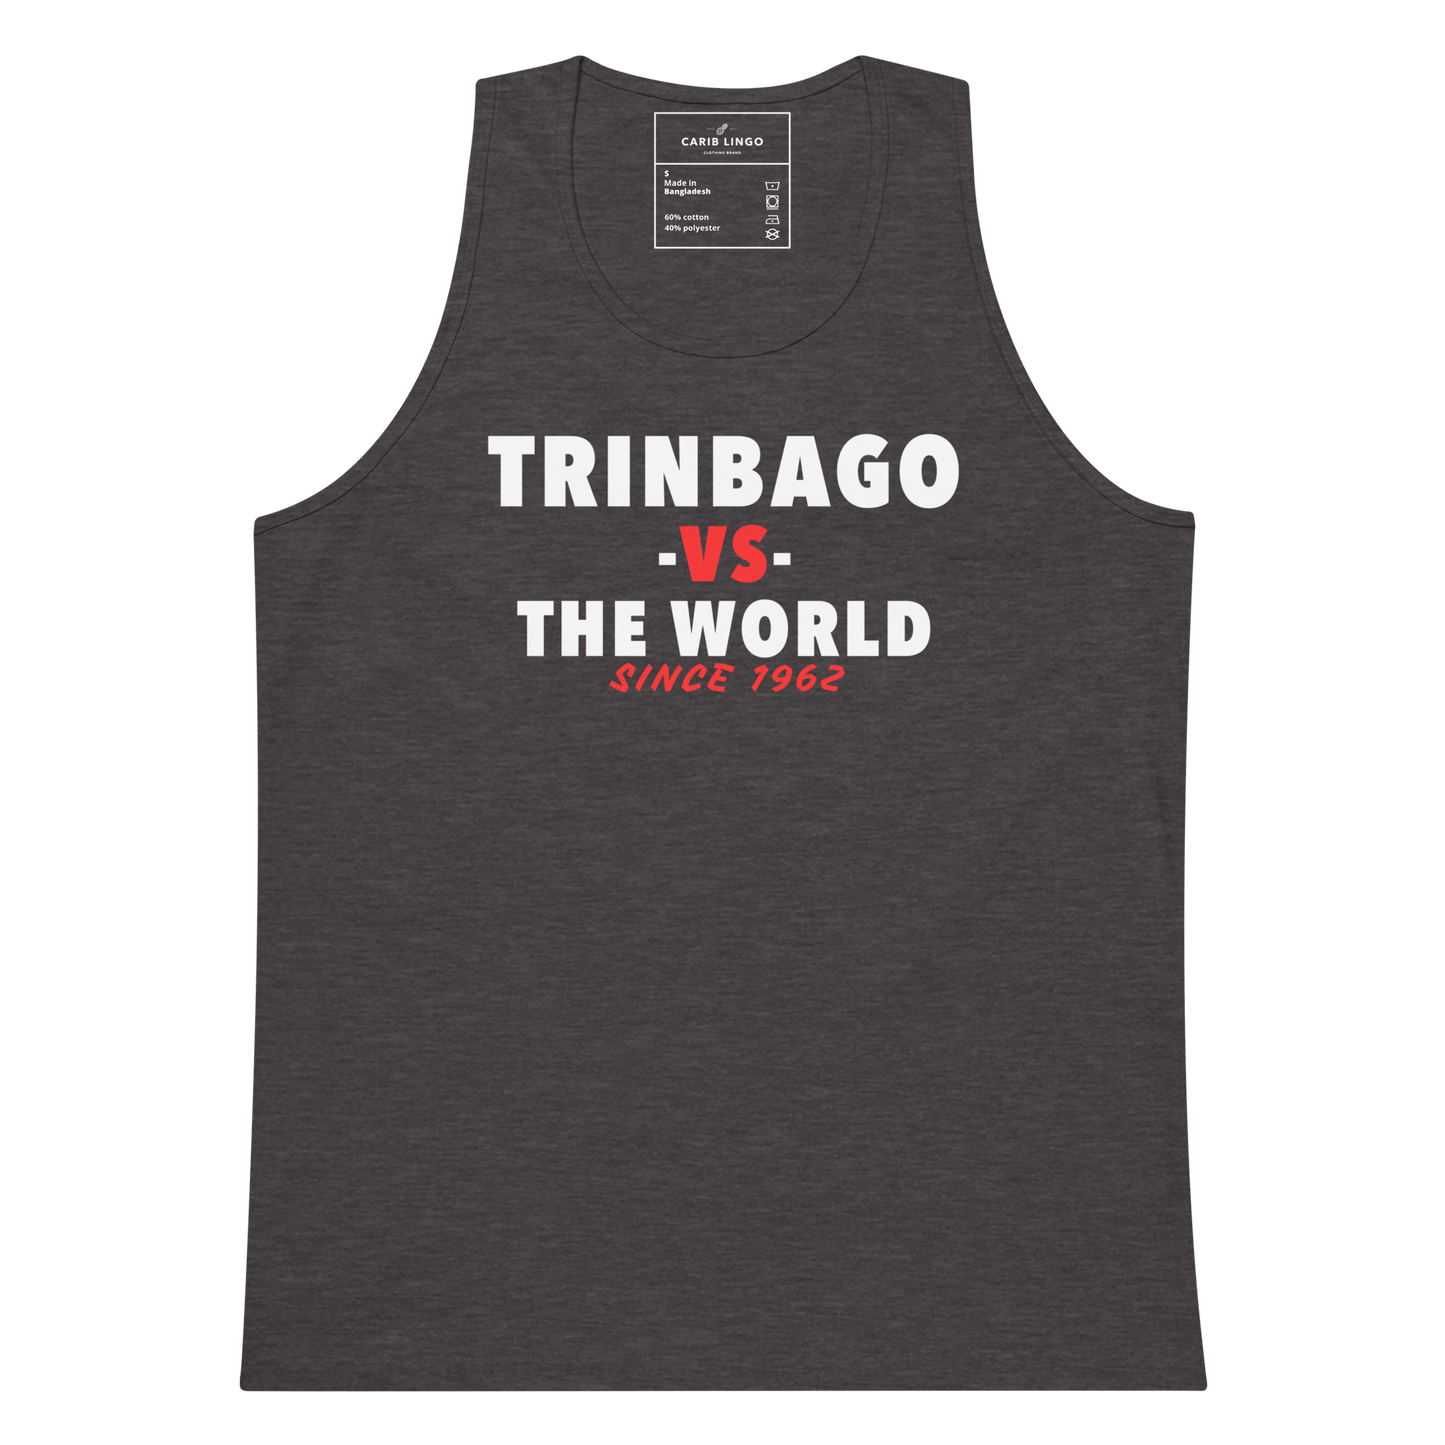 Trinbago -vs- The World Men’s premium tank top